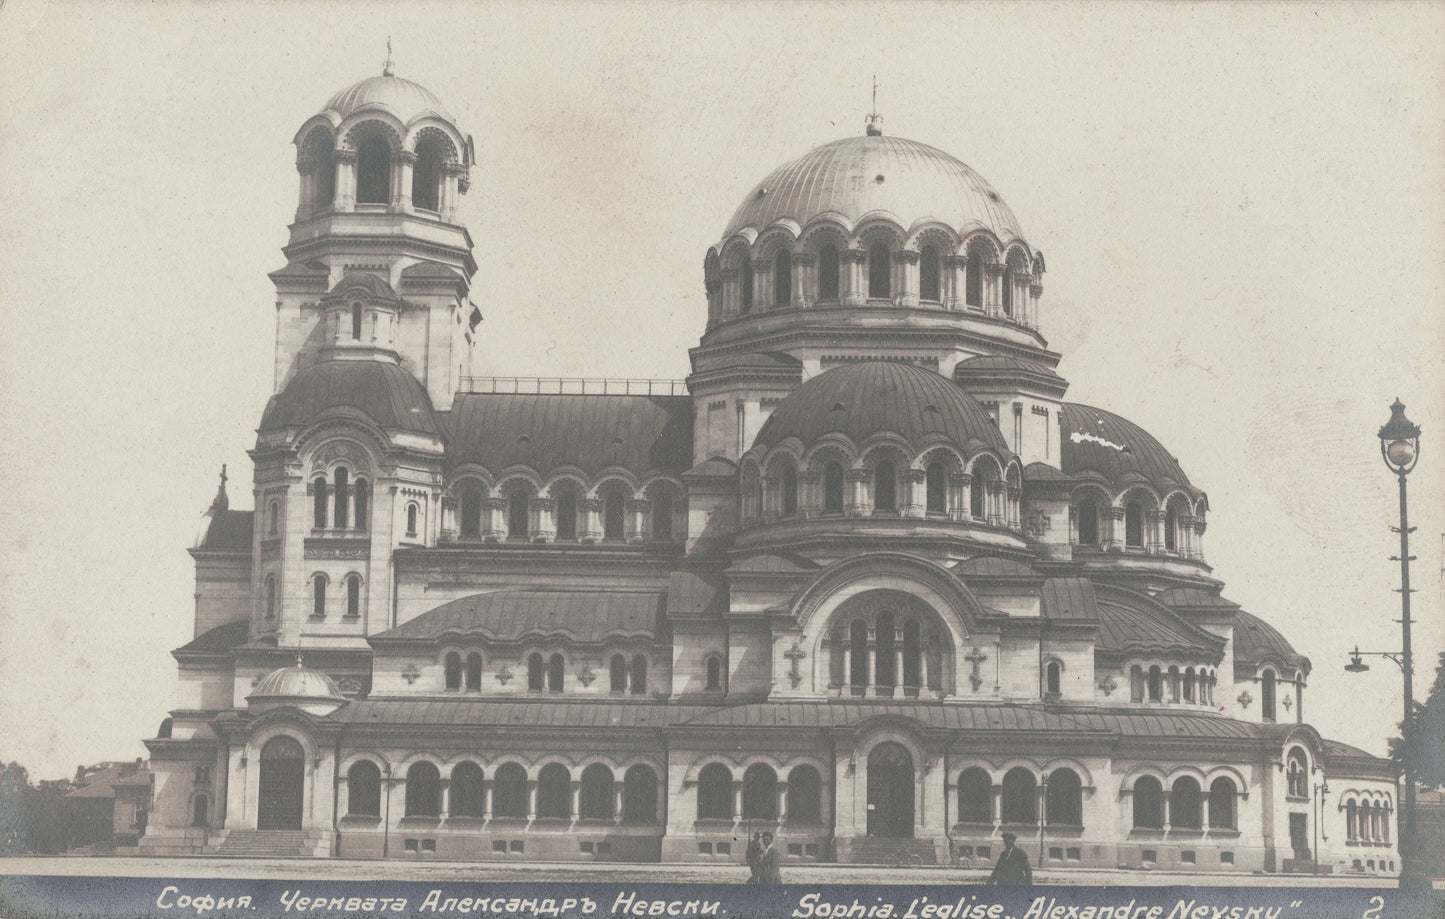 Alexander Nevsky Cathedral II, Sofia